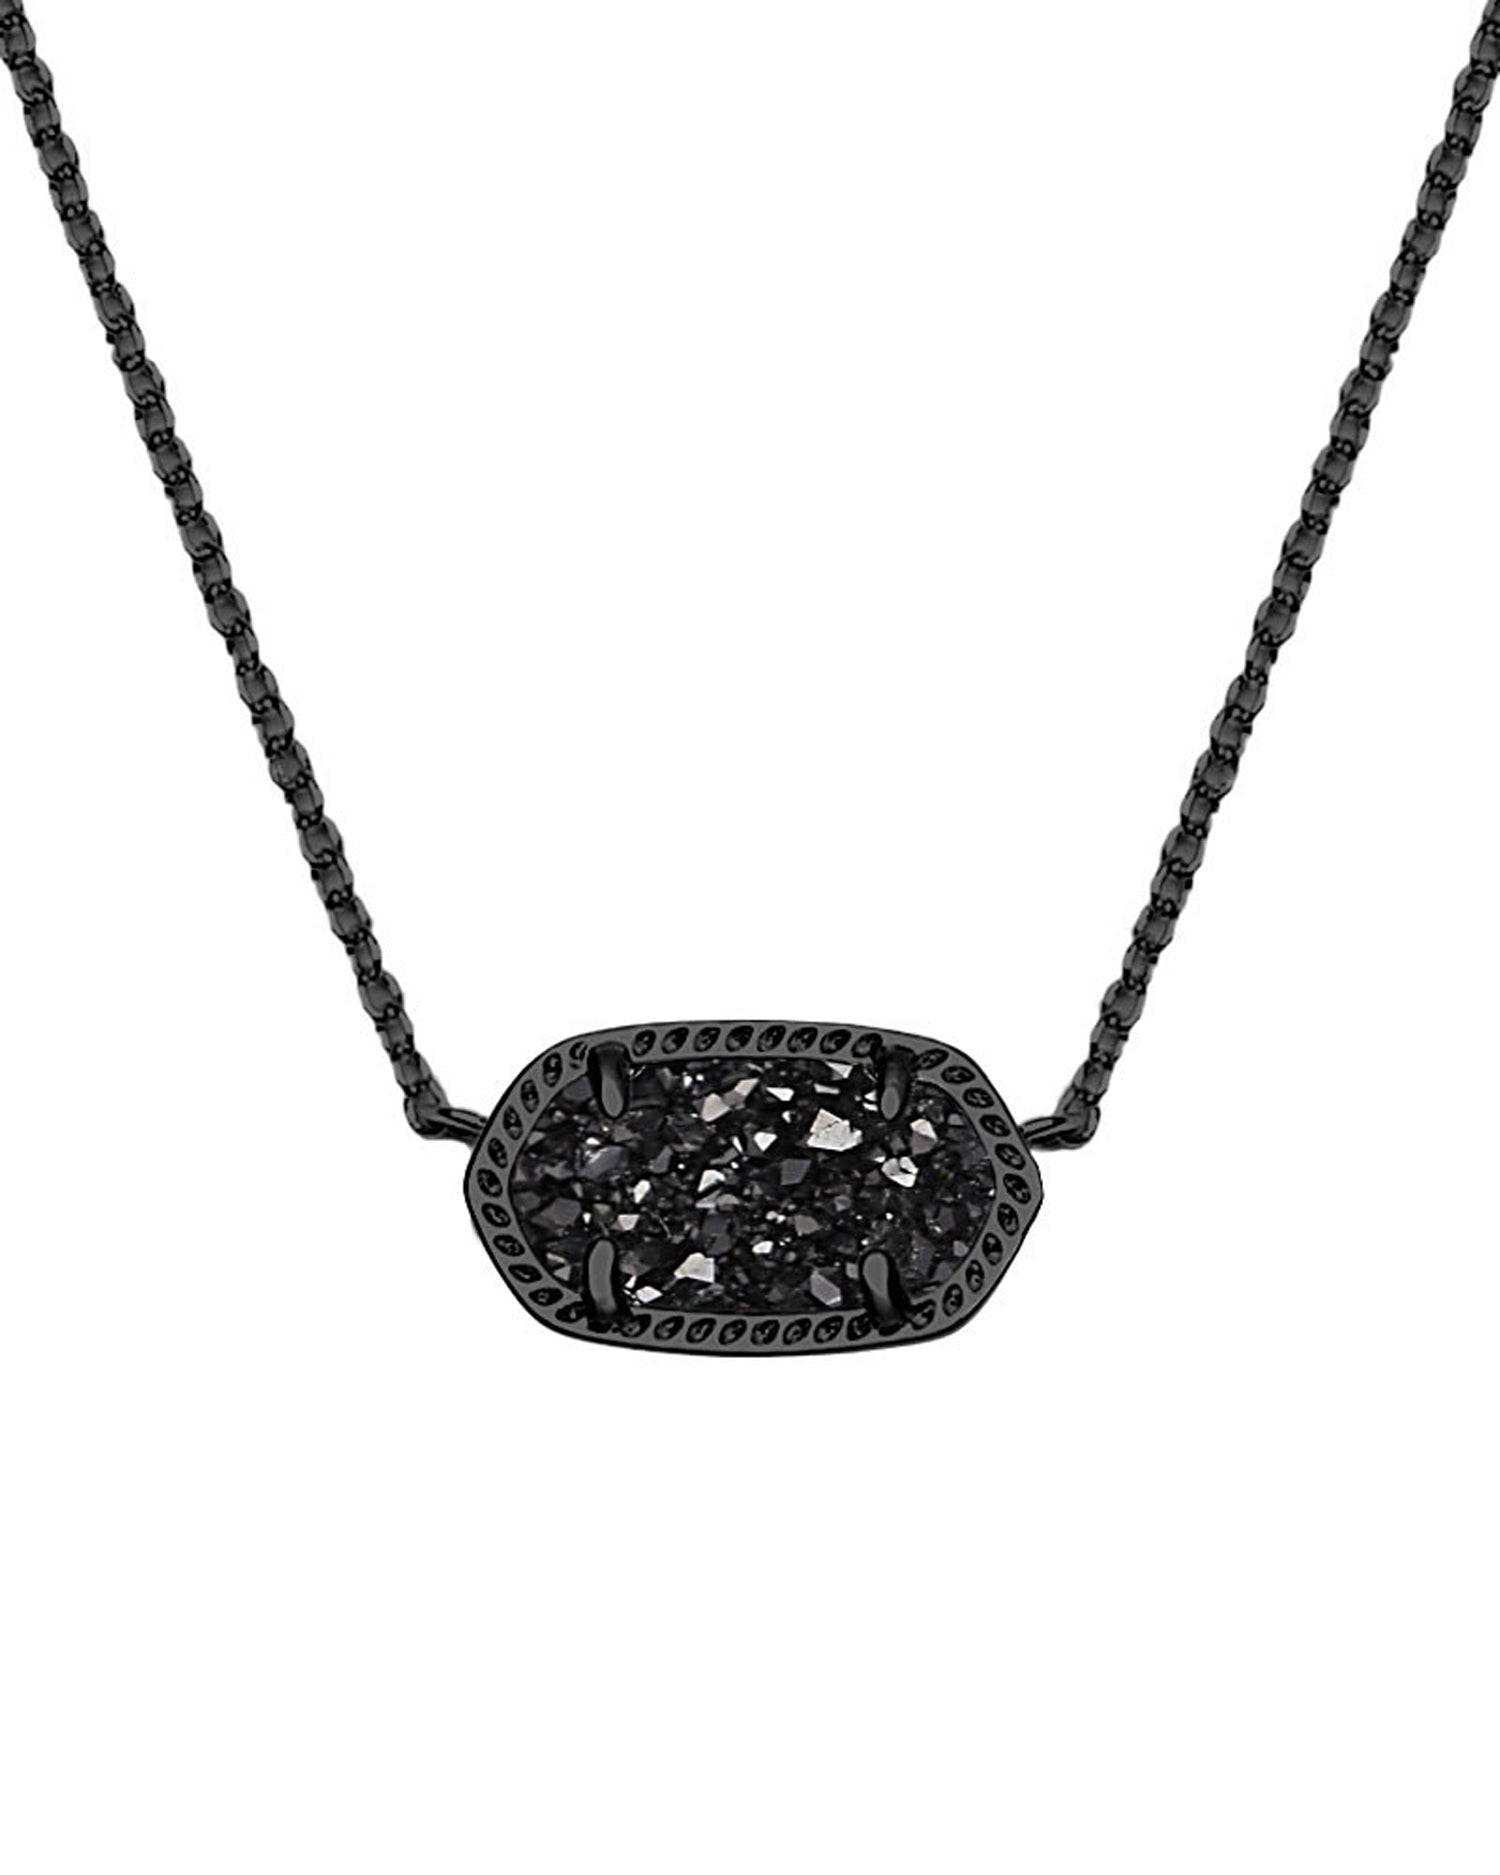 Kendra Scott Elisa Oval Pendant Necklace in Black Drusy and Gunmetal